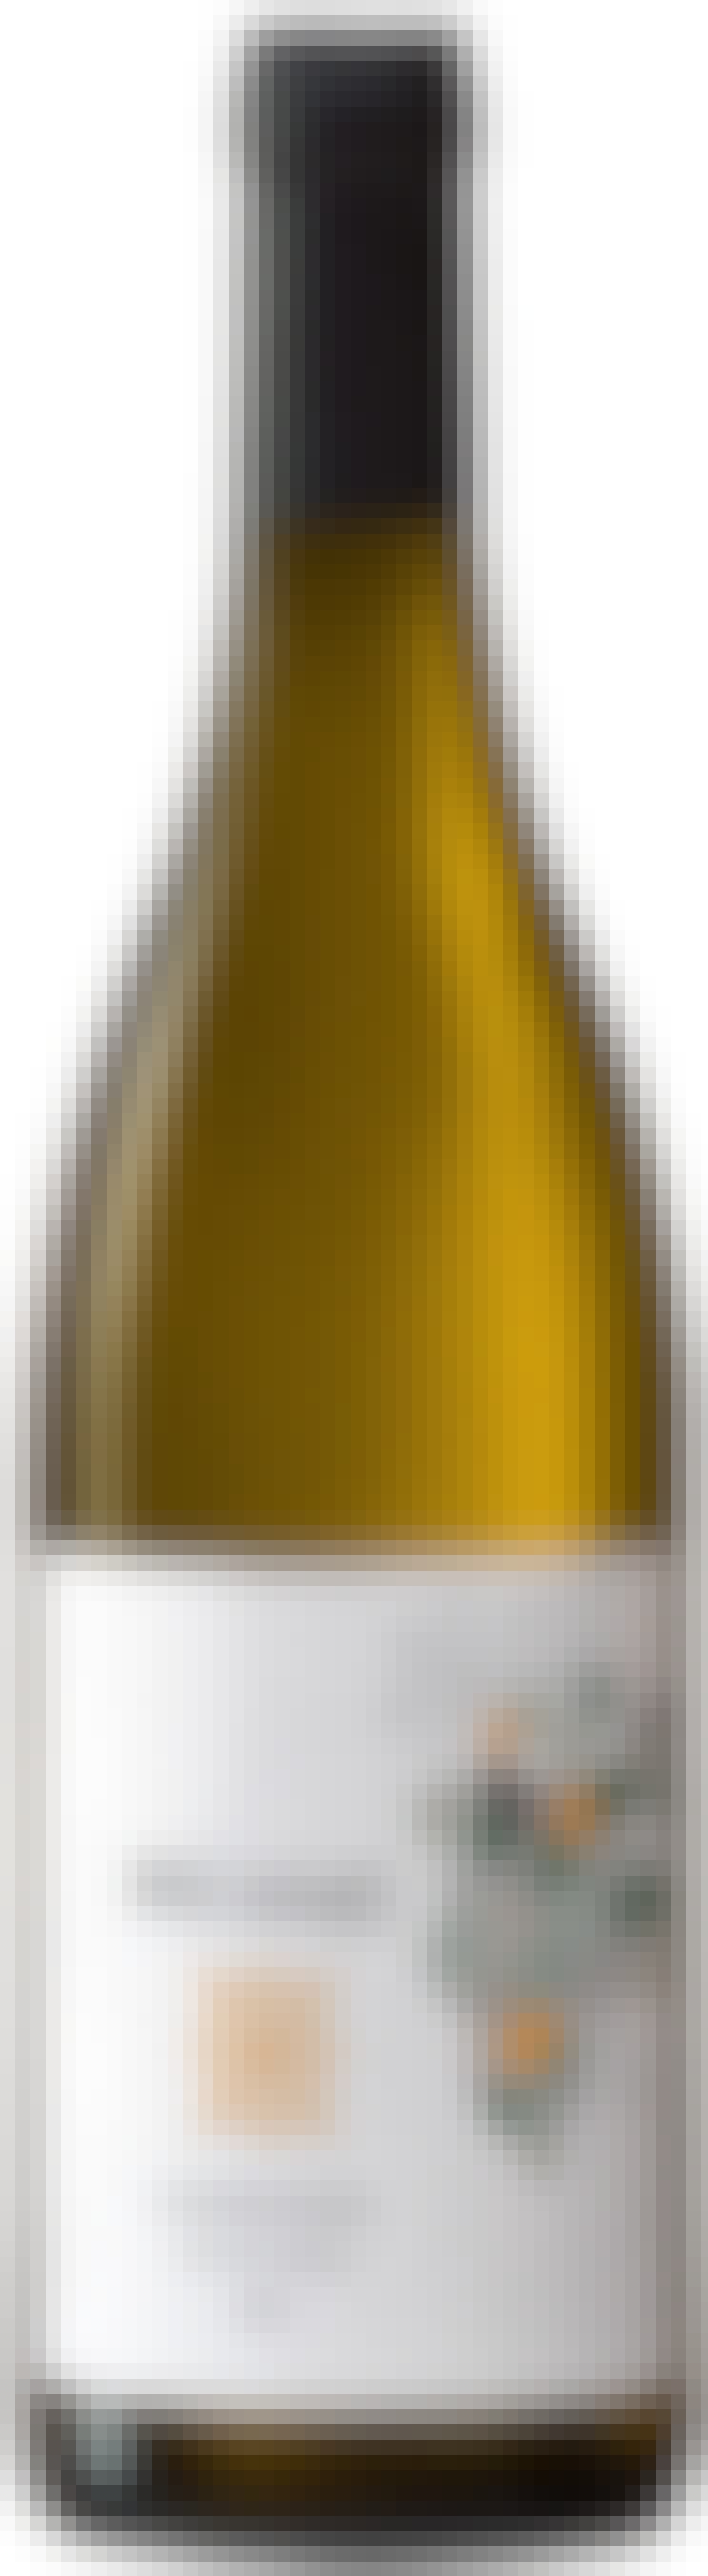 Recanati Chardonnay 2021 750ml